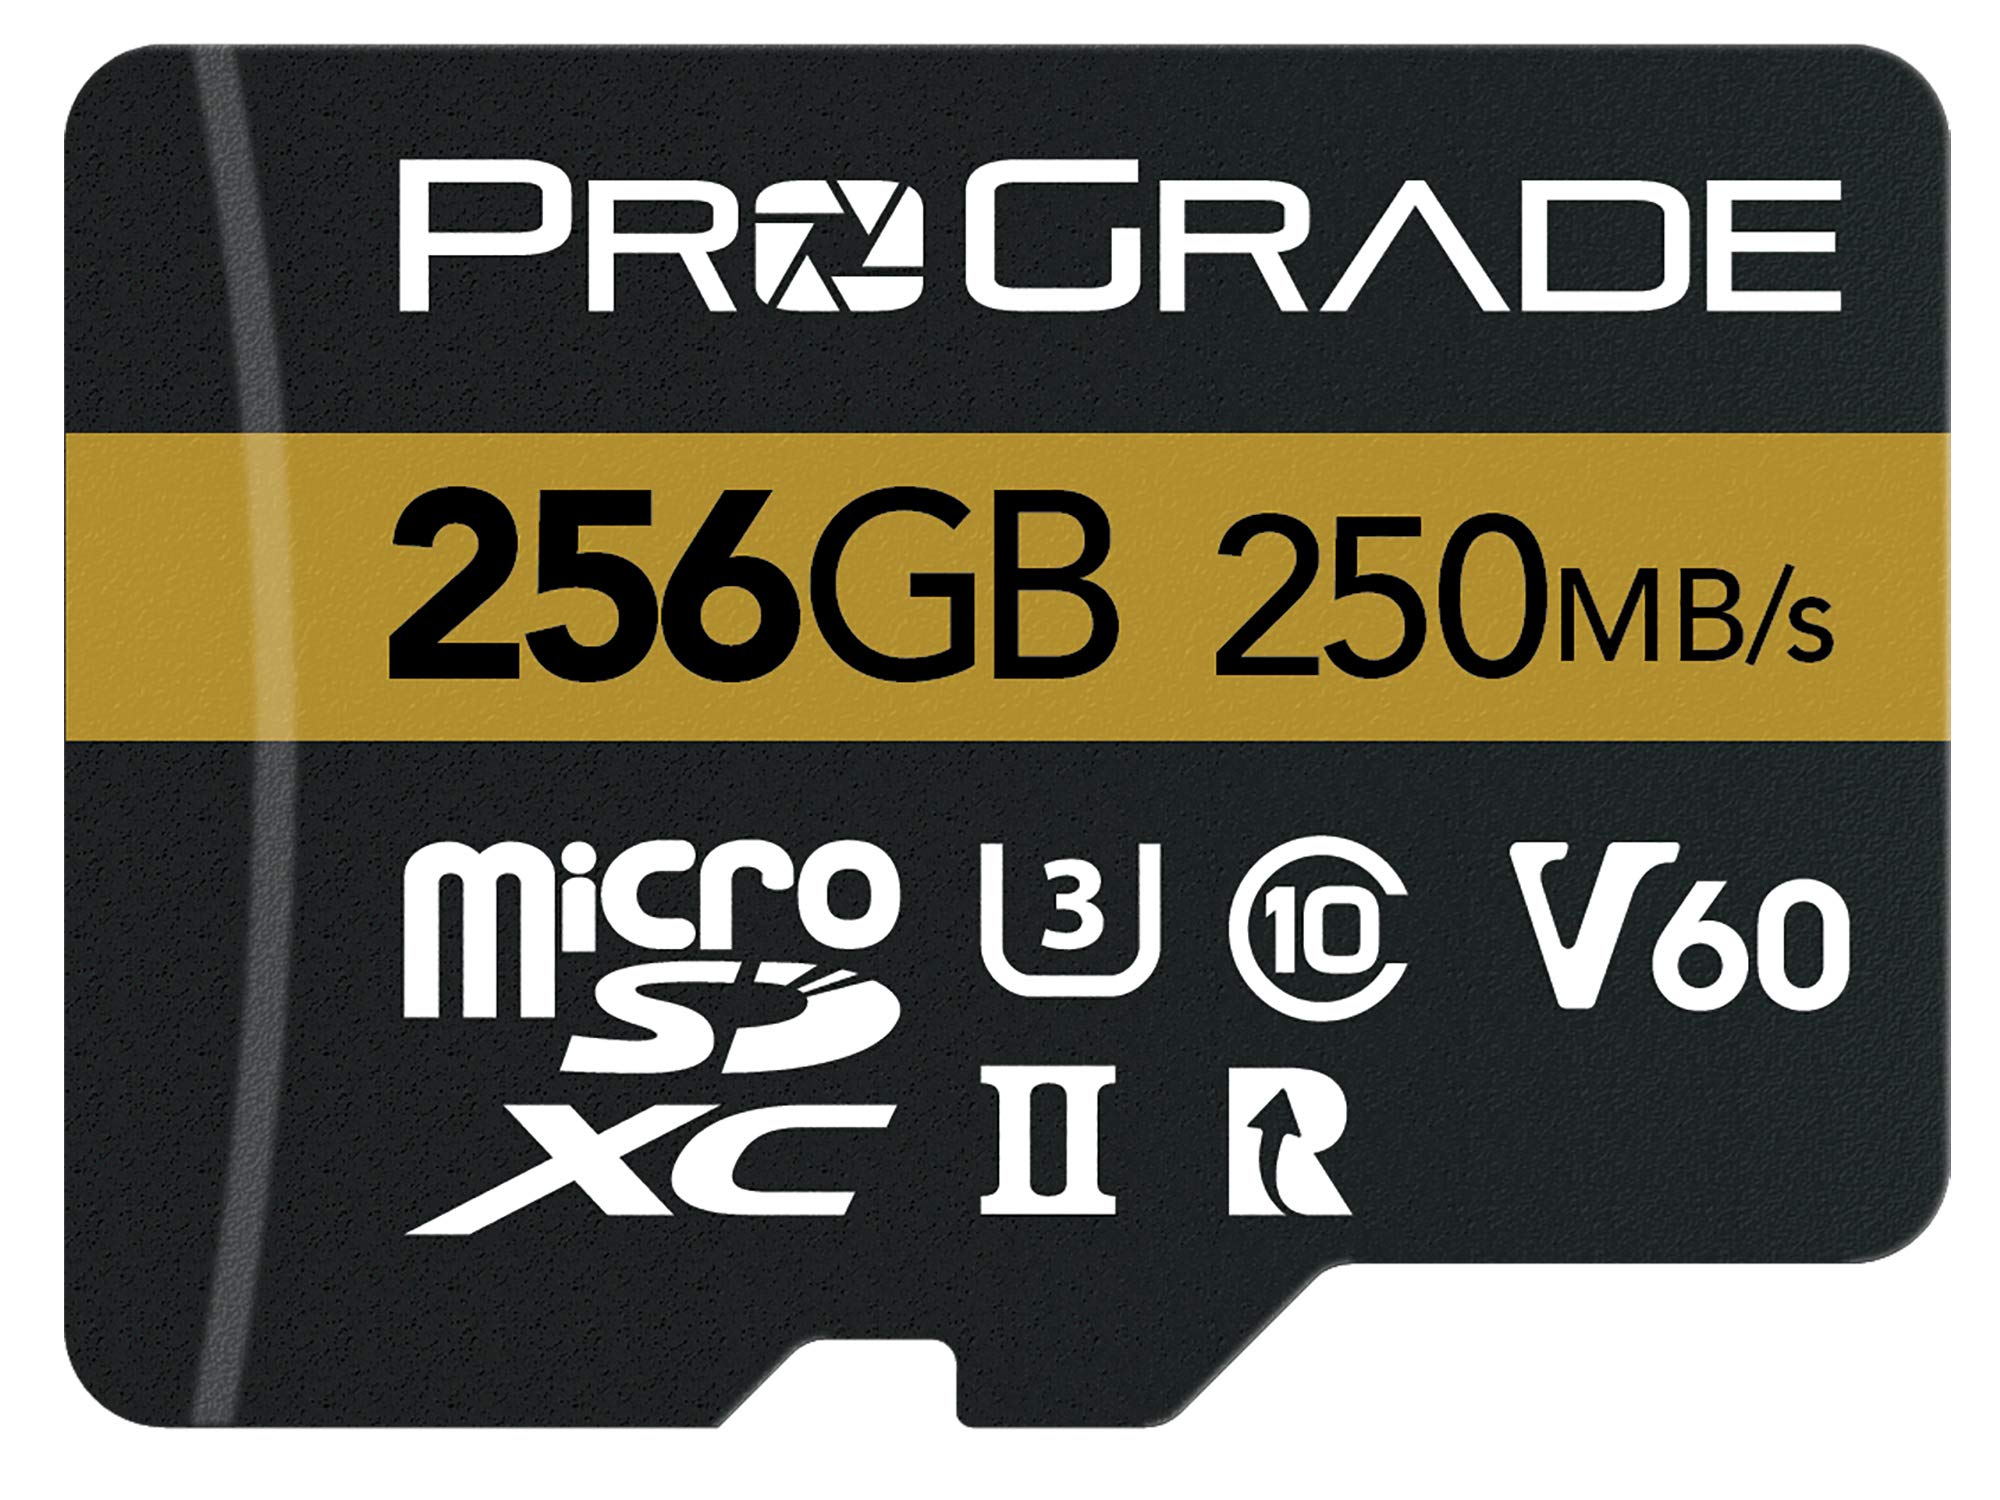 ProGrade Digital microSDXC UHS-II V60 GOLD 256GB